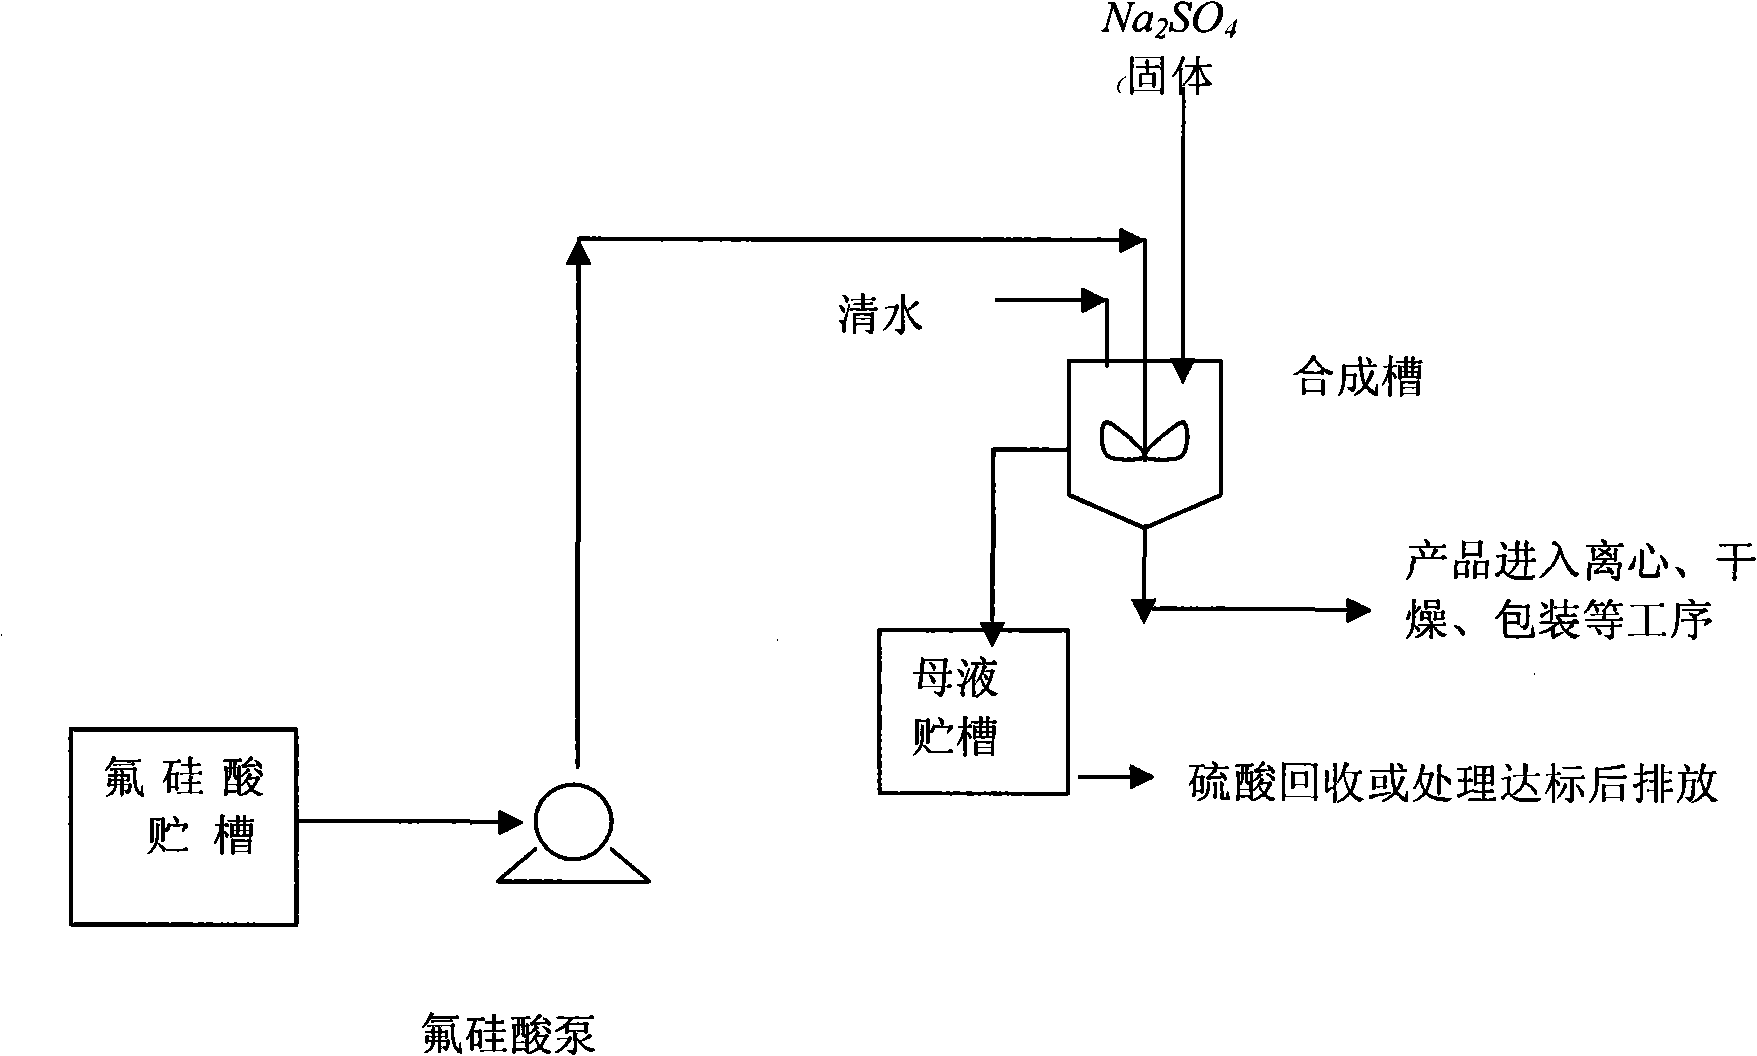 Preparation process of prodan by sodium sulfate method